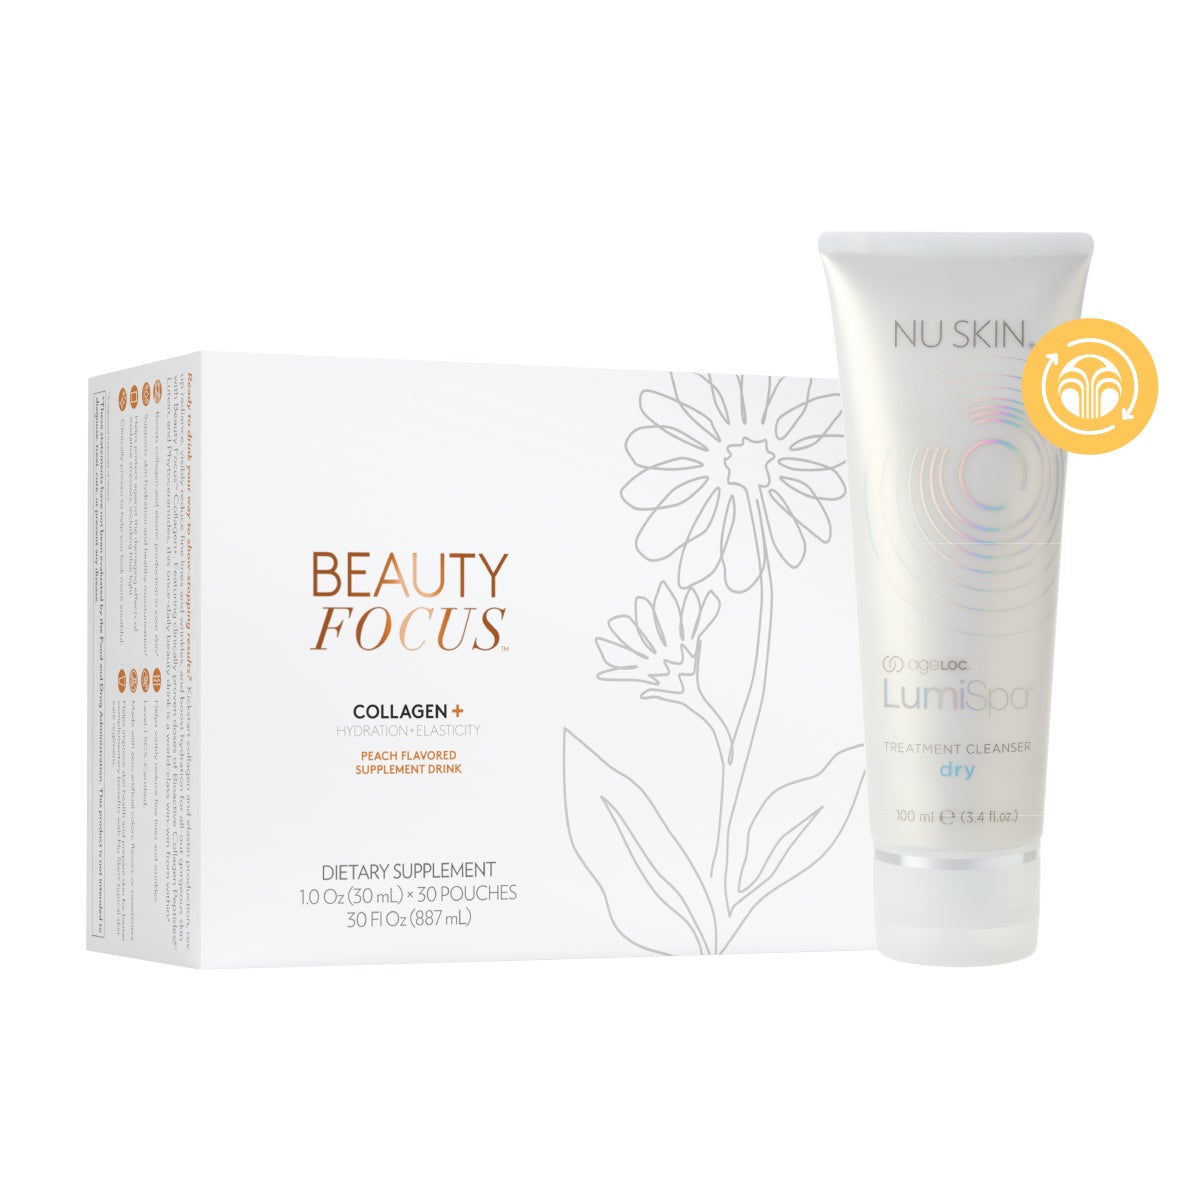 Beauty Focus™ Collagen+ Peach & ageLOC® LumiSpa® Cleanser (Dry) Subscription